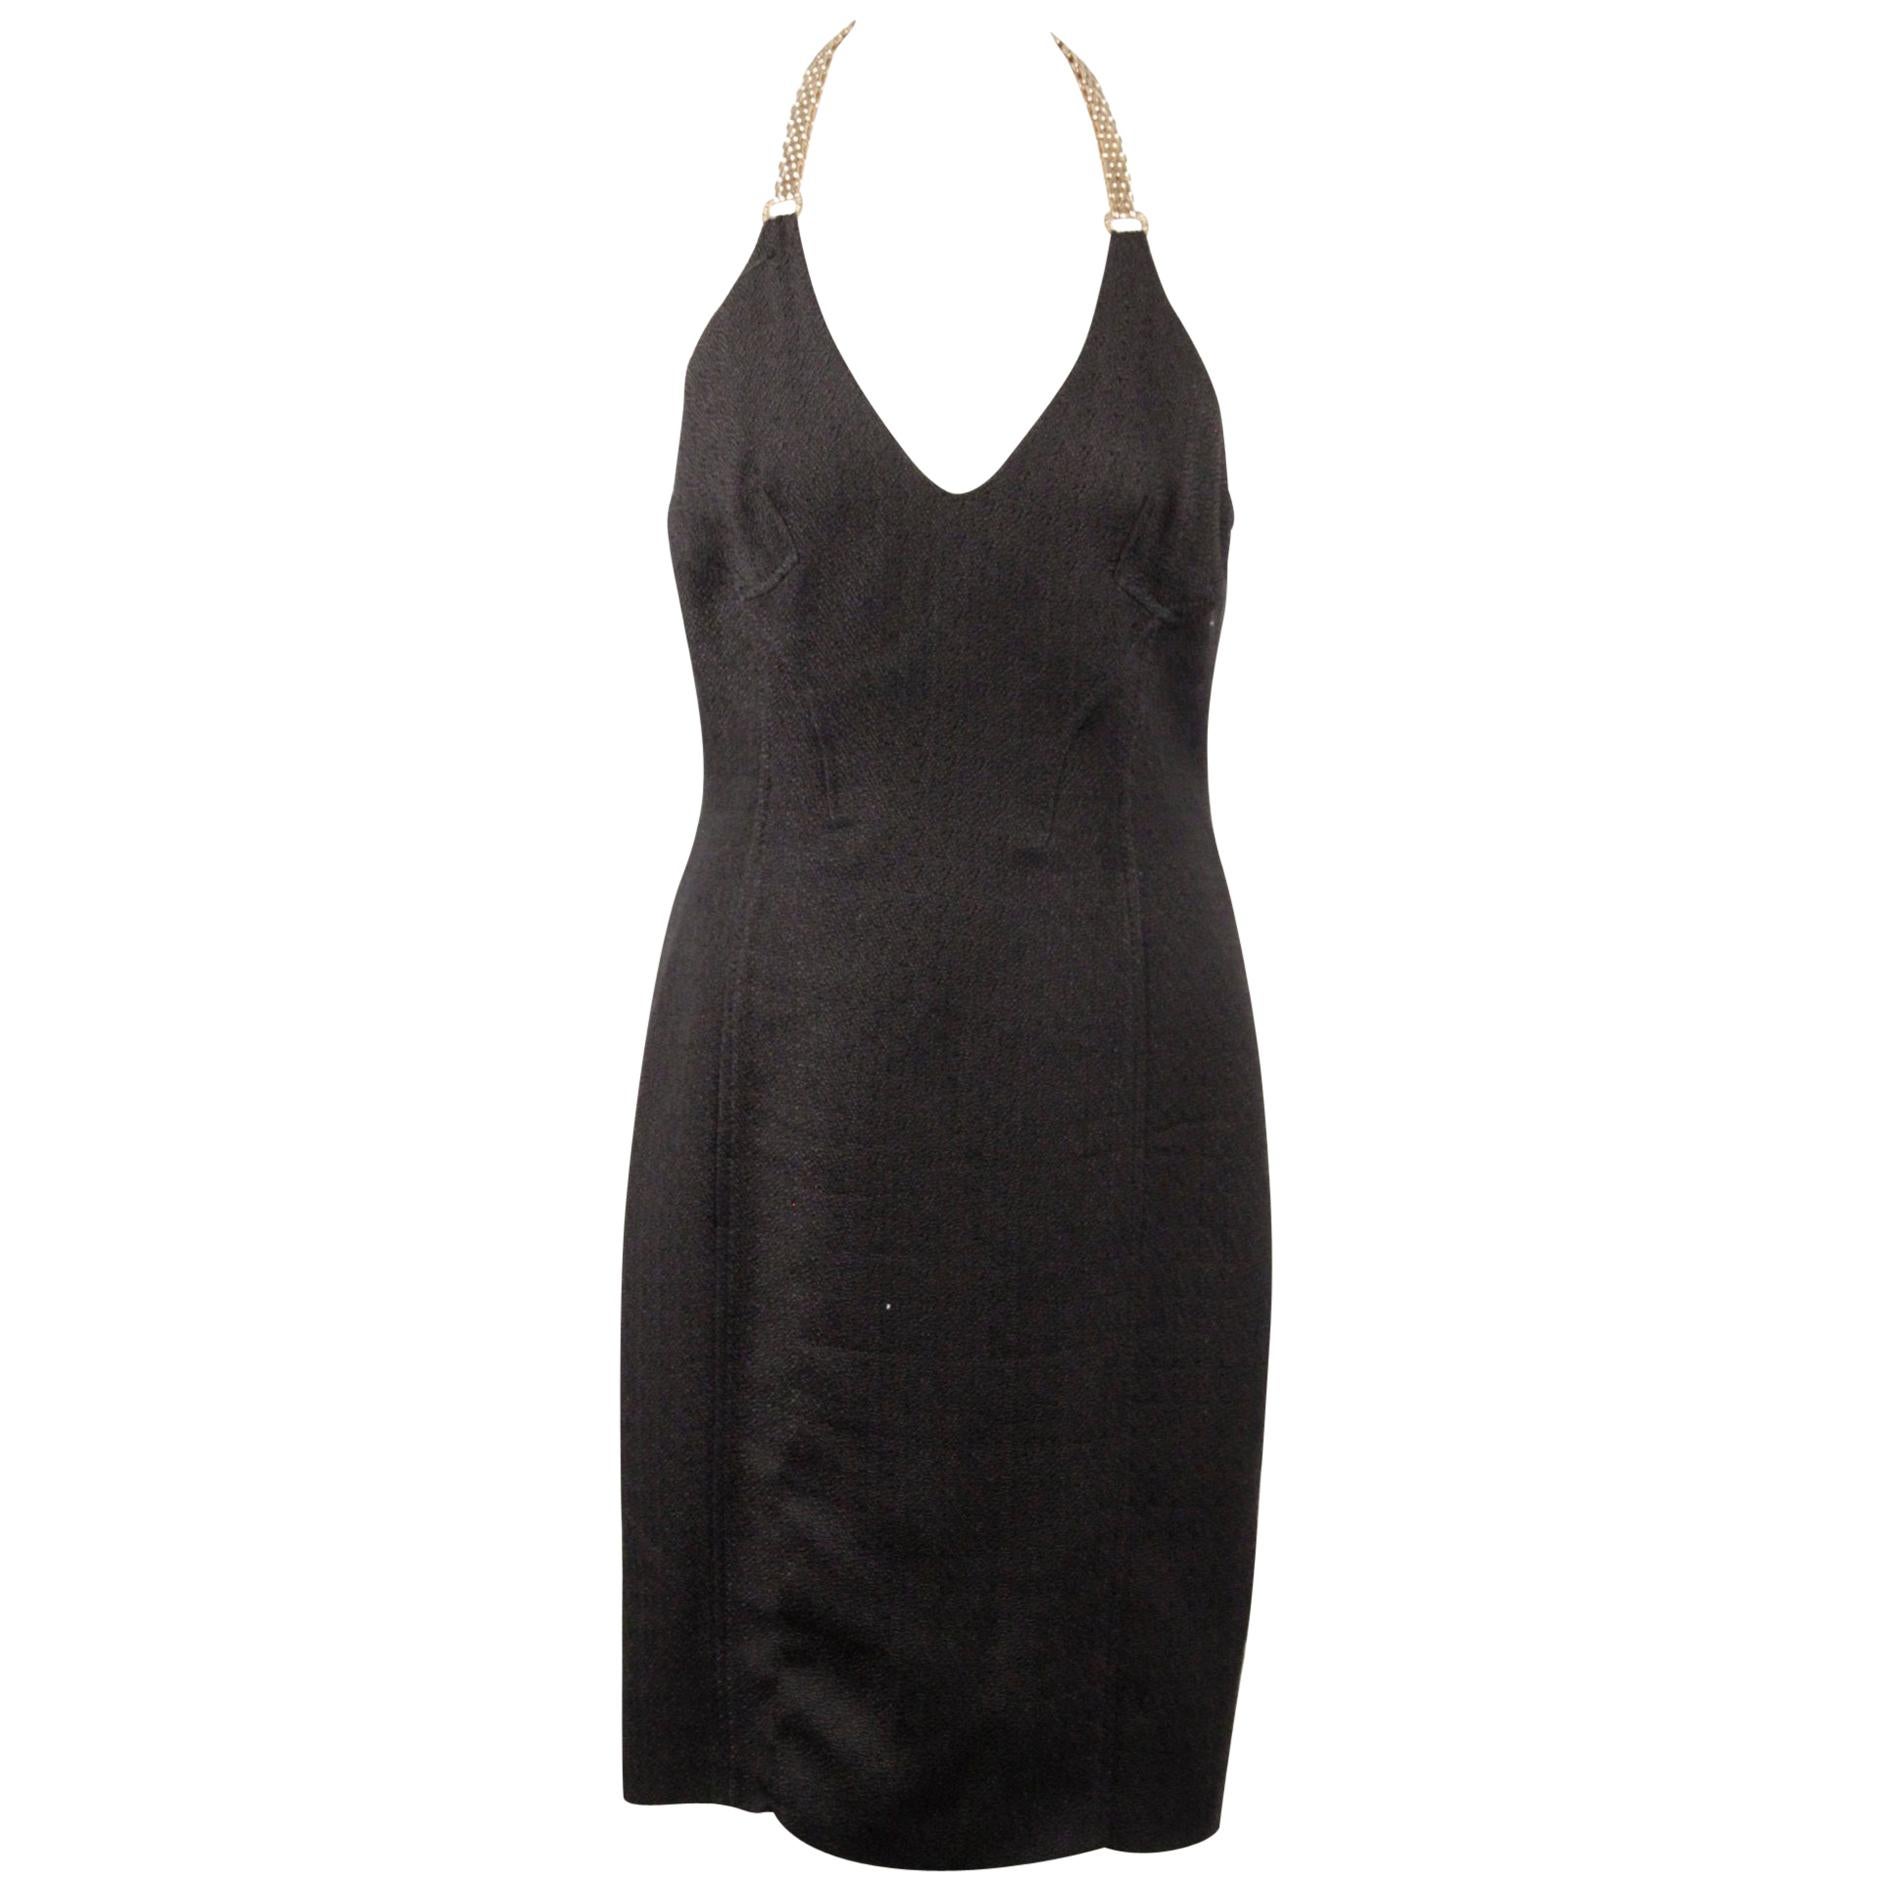 Versace Black Cotton Blend Halterneck dress with chain Strap Size 42